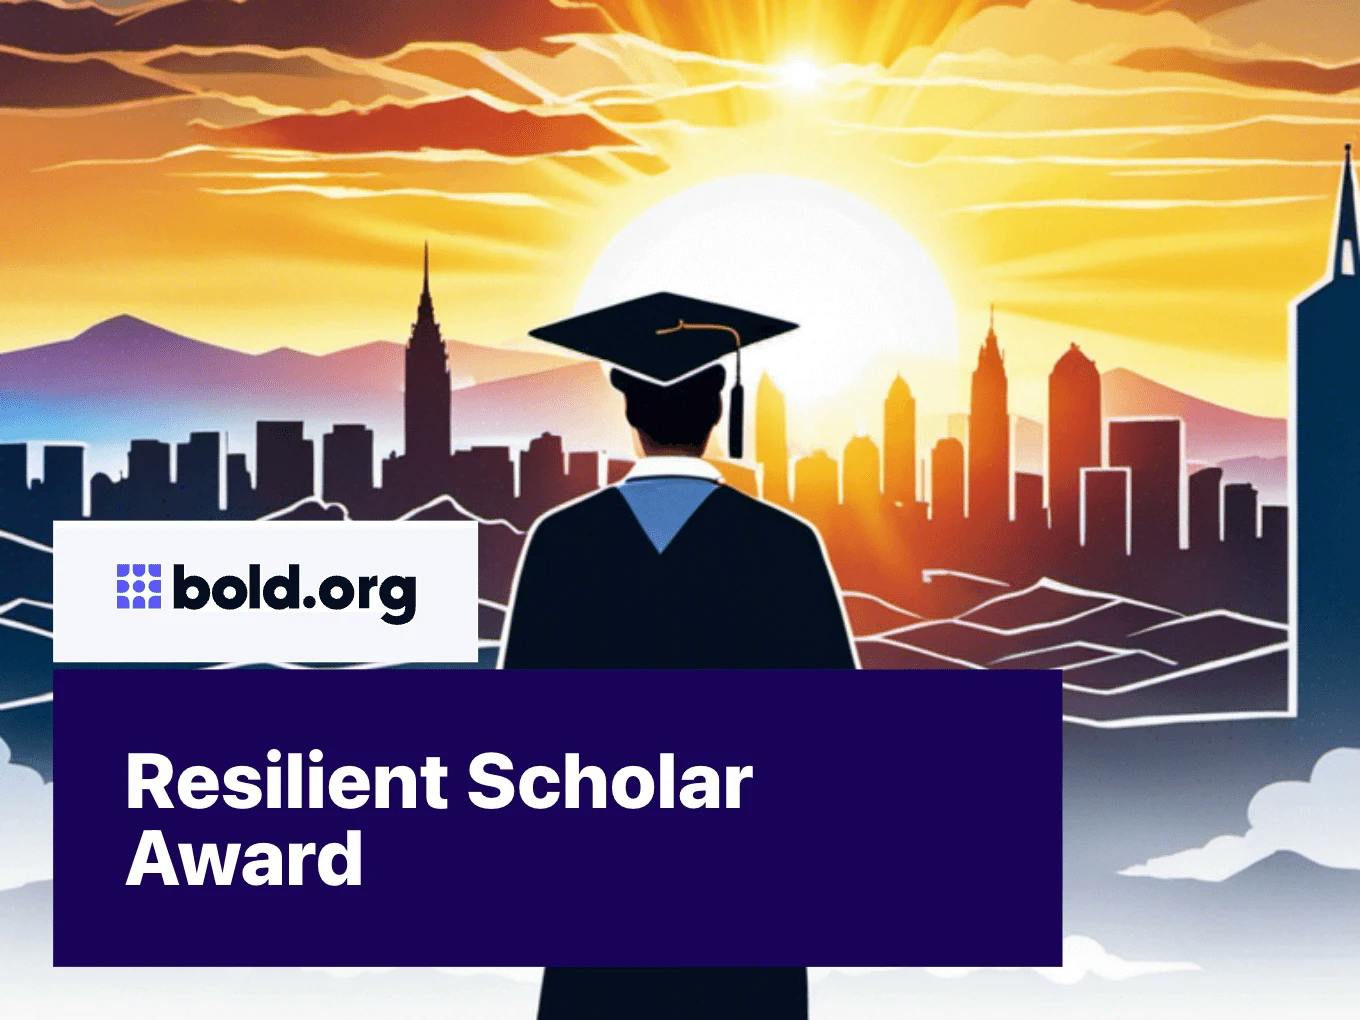 Resilient Scholar Award